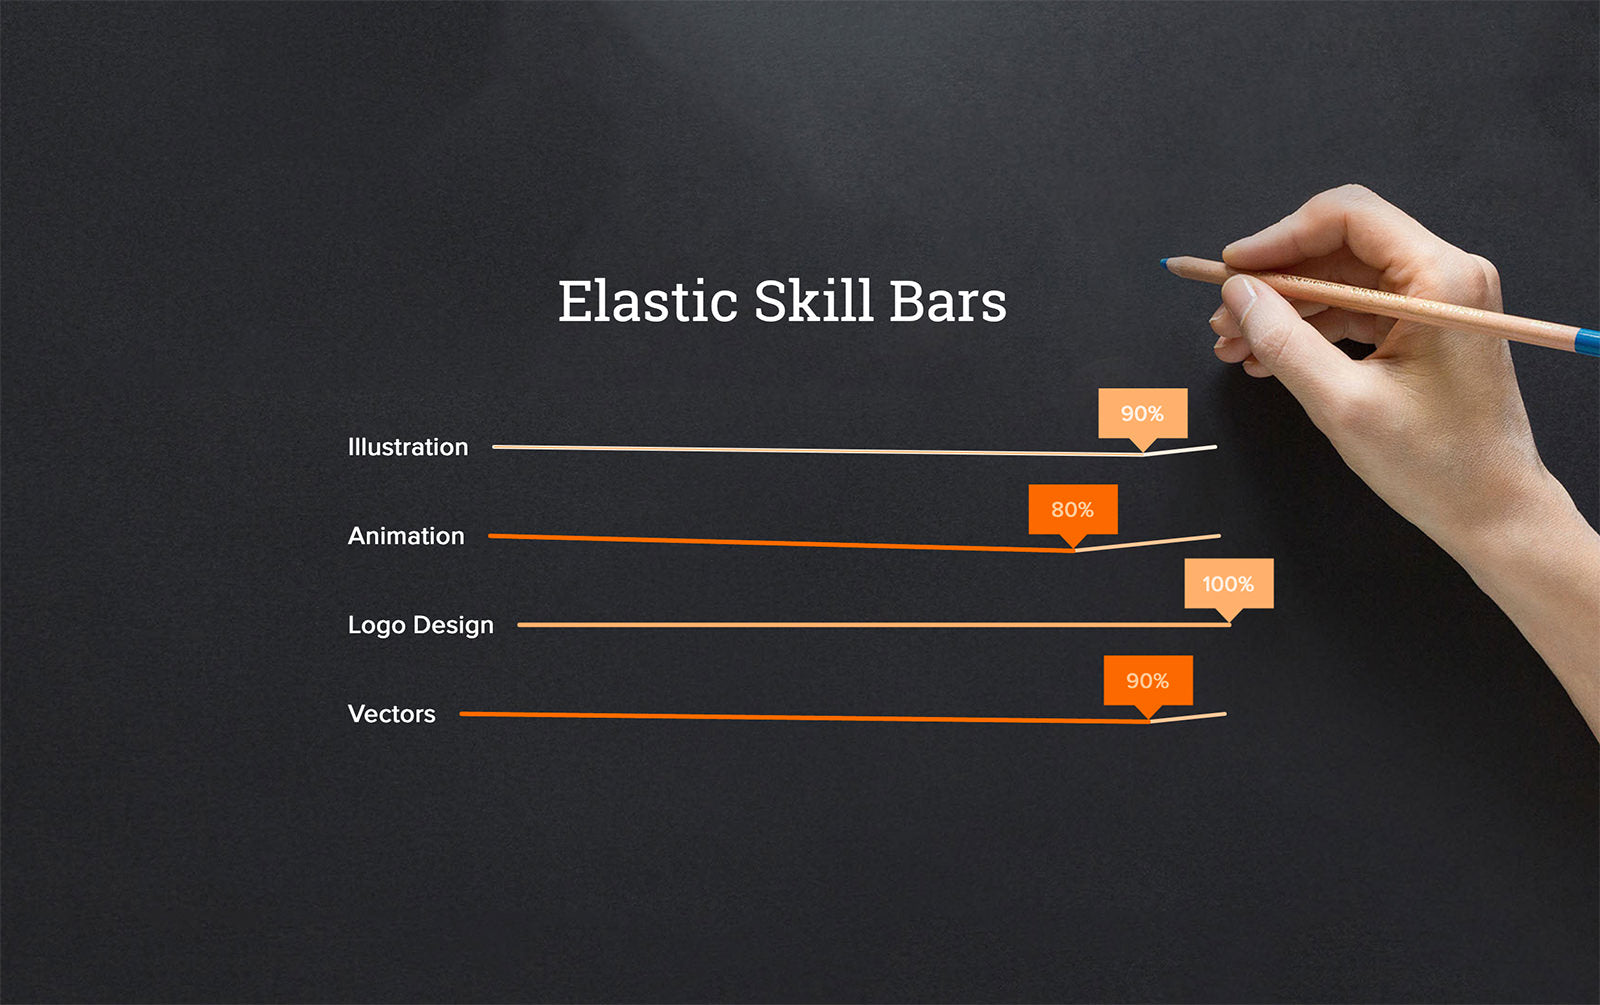 Elastic Skill Bars